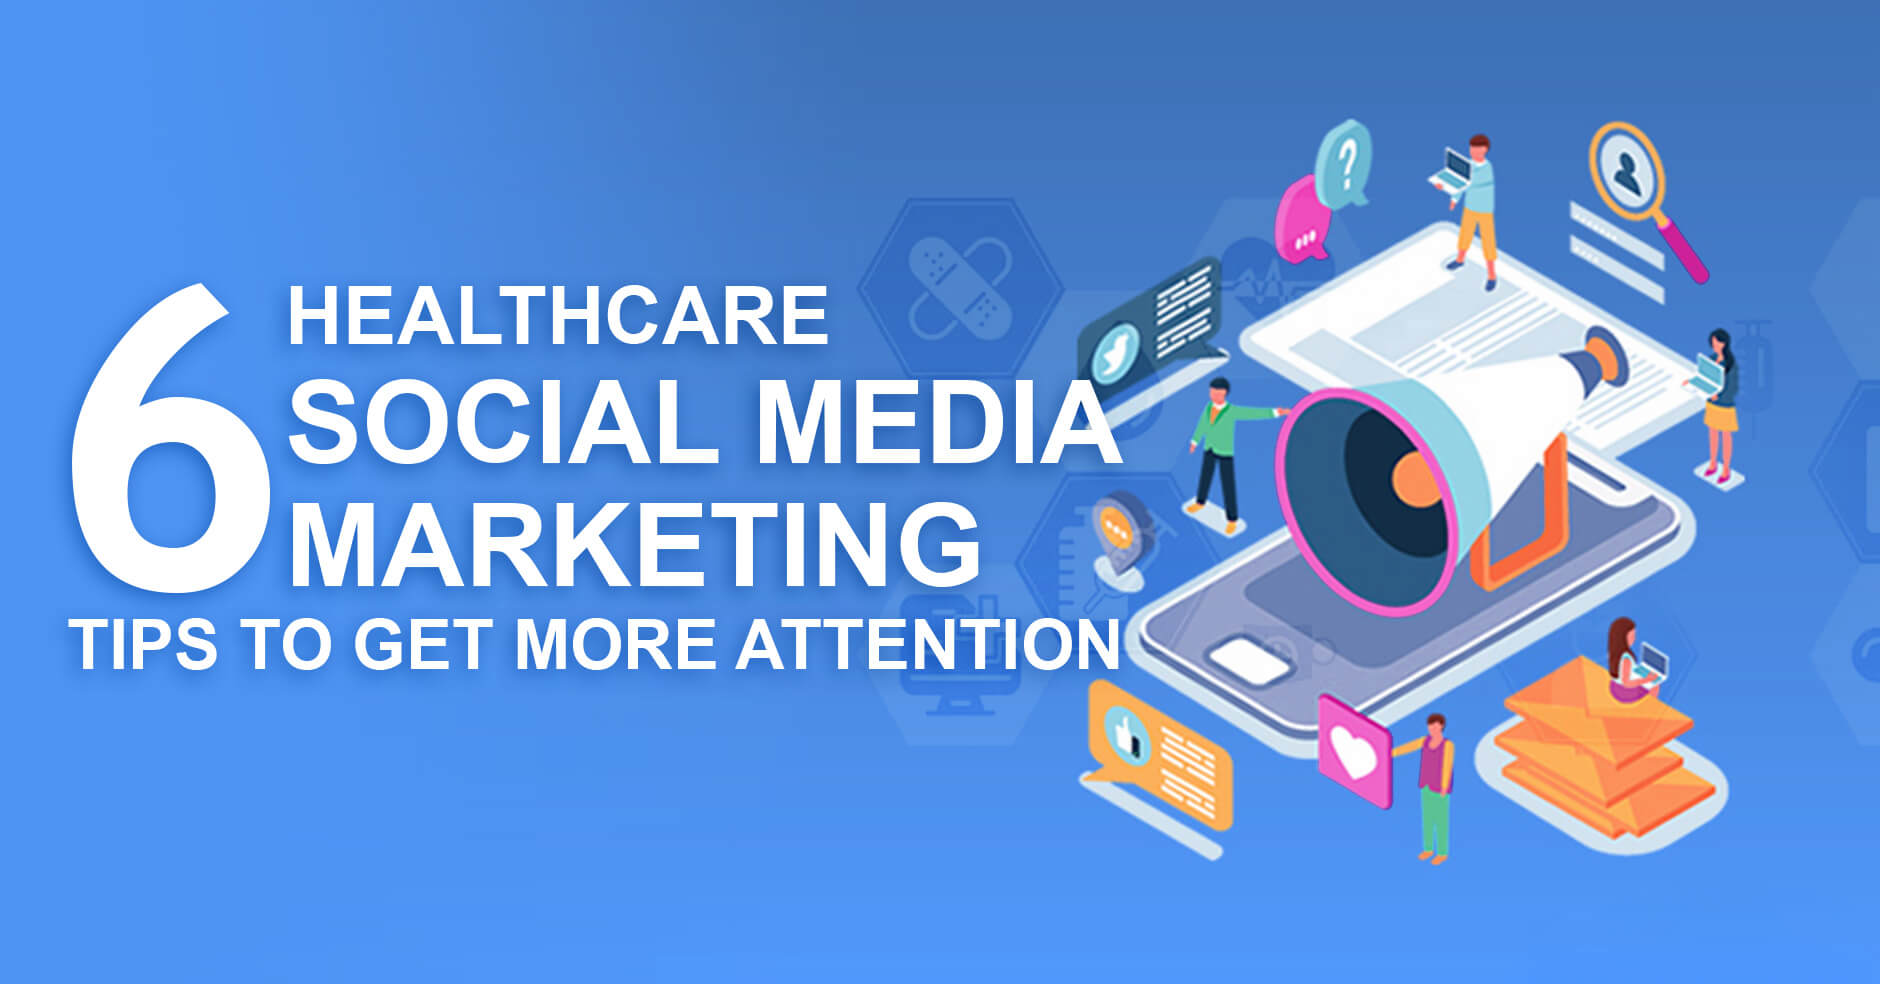 6 Healthcare Social Media Marketing